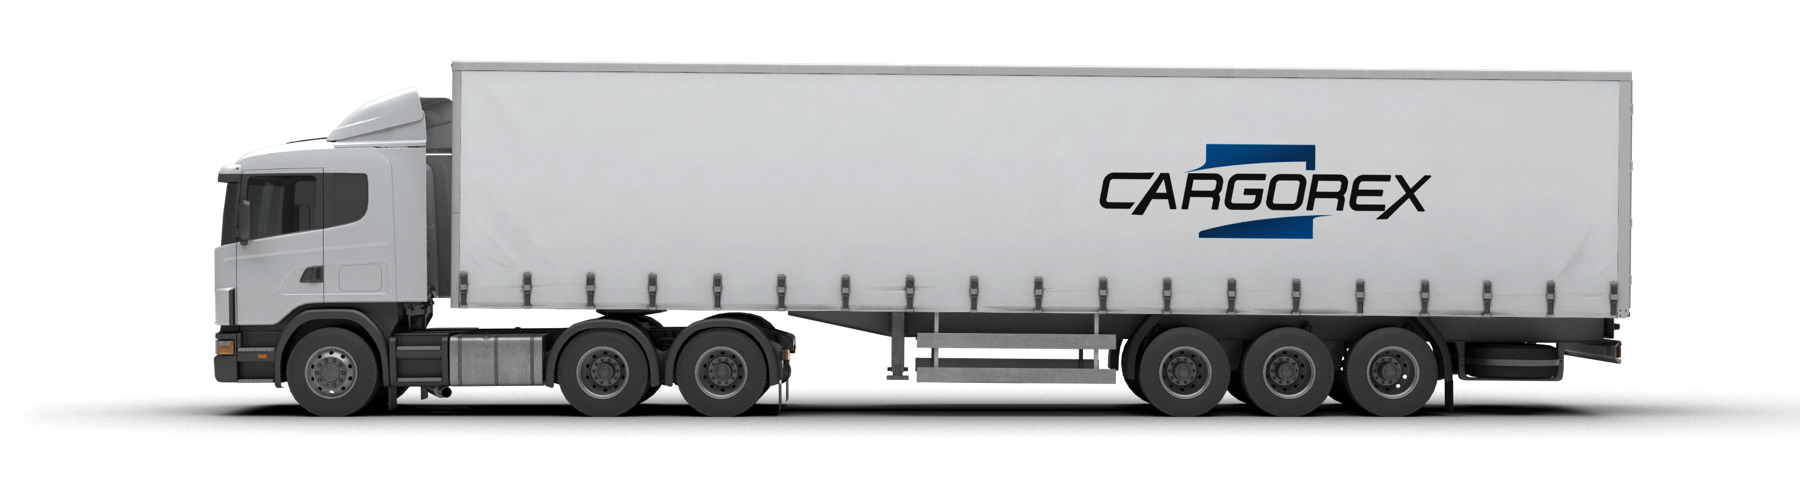 Cargorexpsd online - West Yorkshire Güterverkehrsdienste